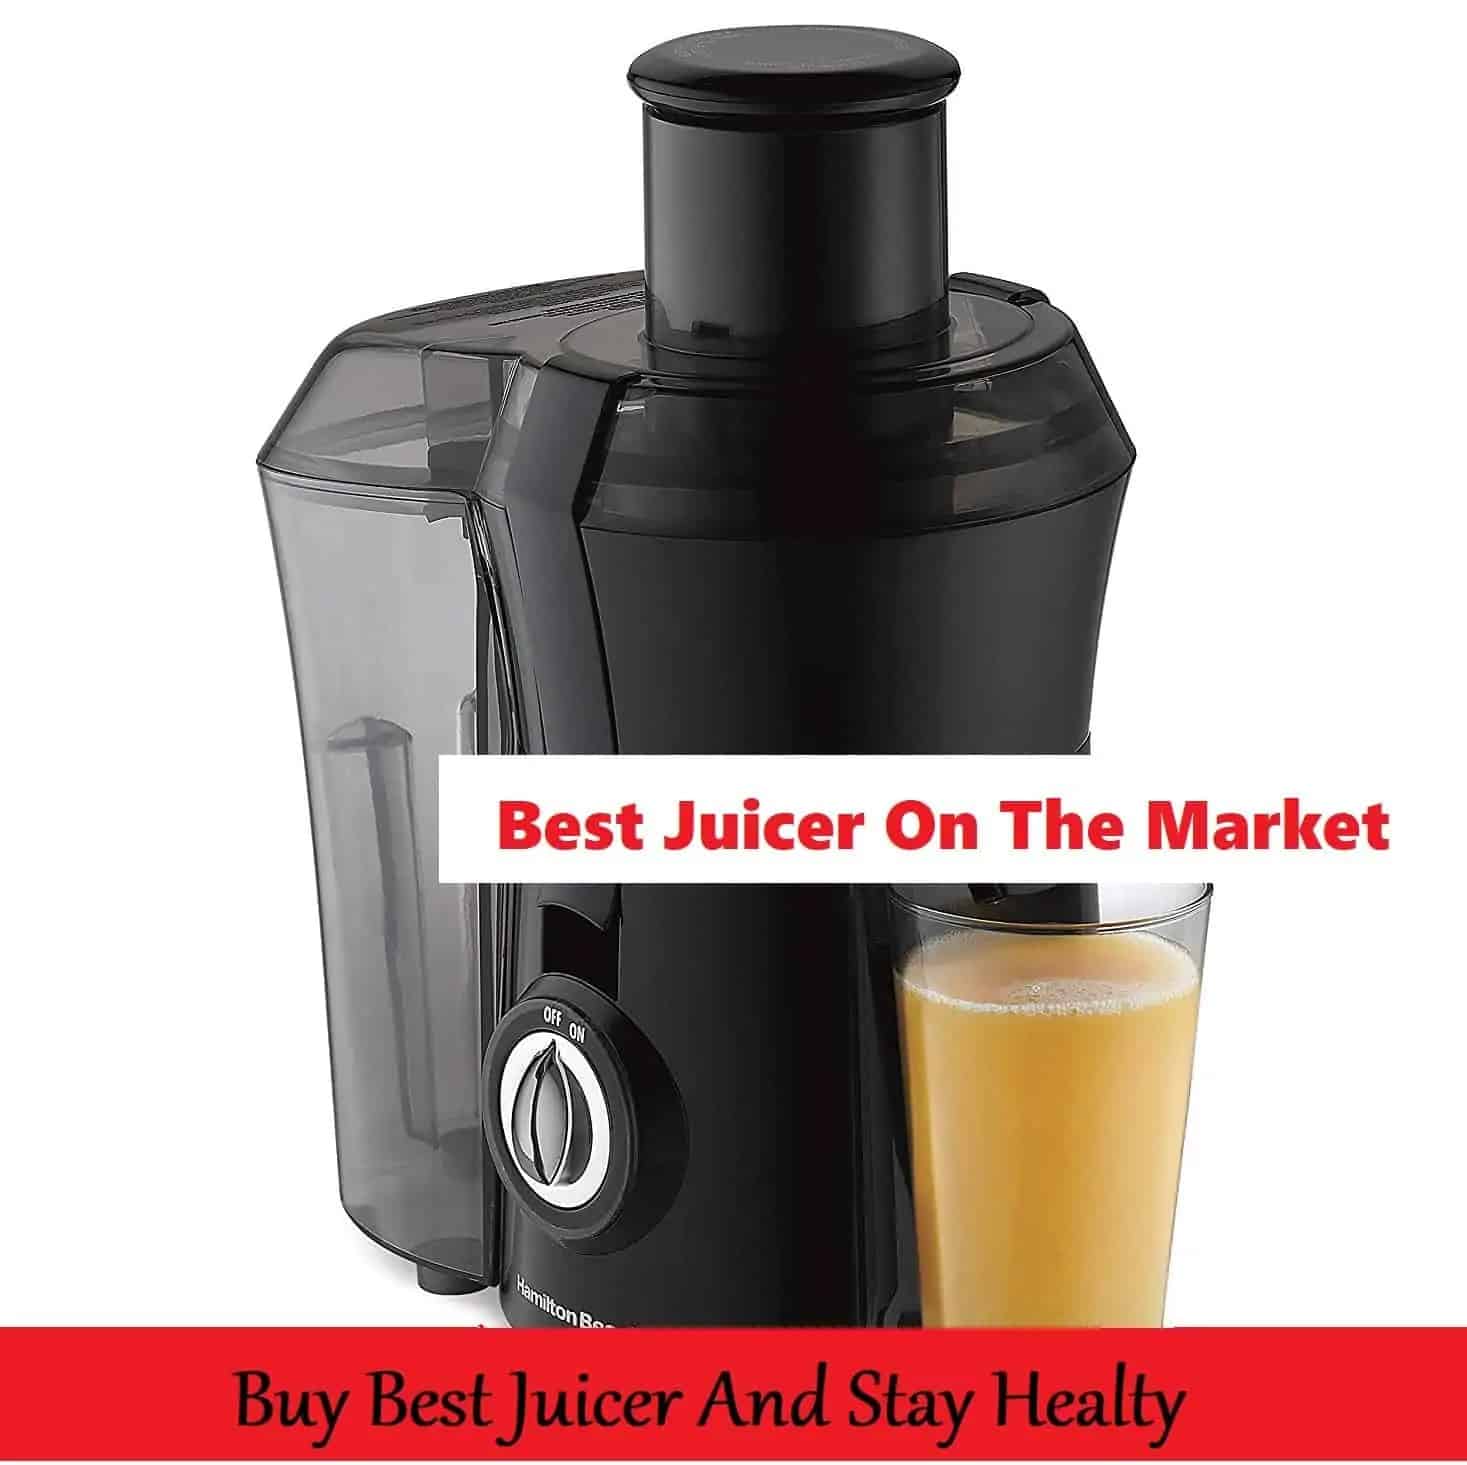 Top 5 Best Juicer On The Market